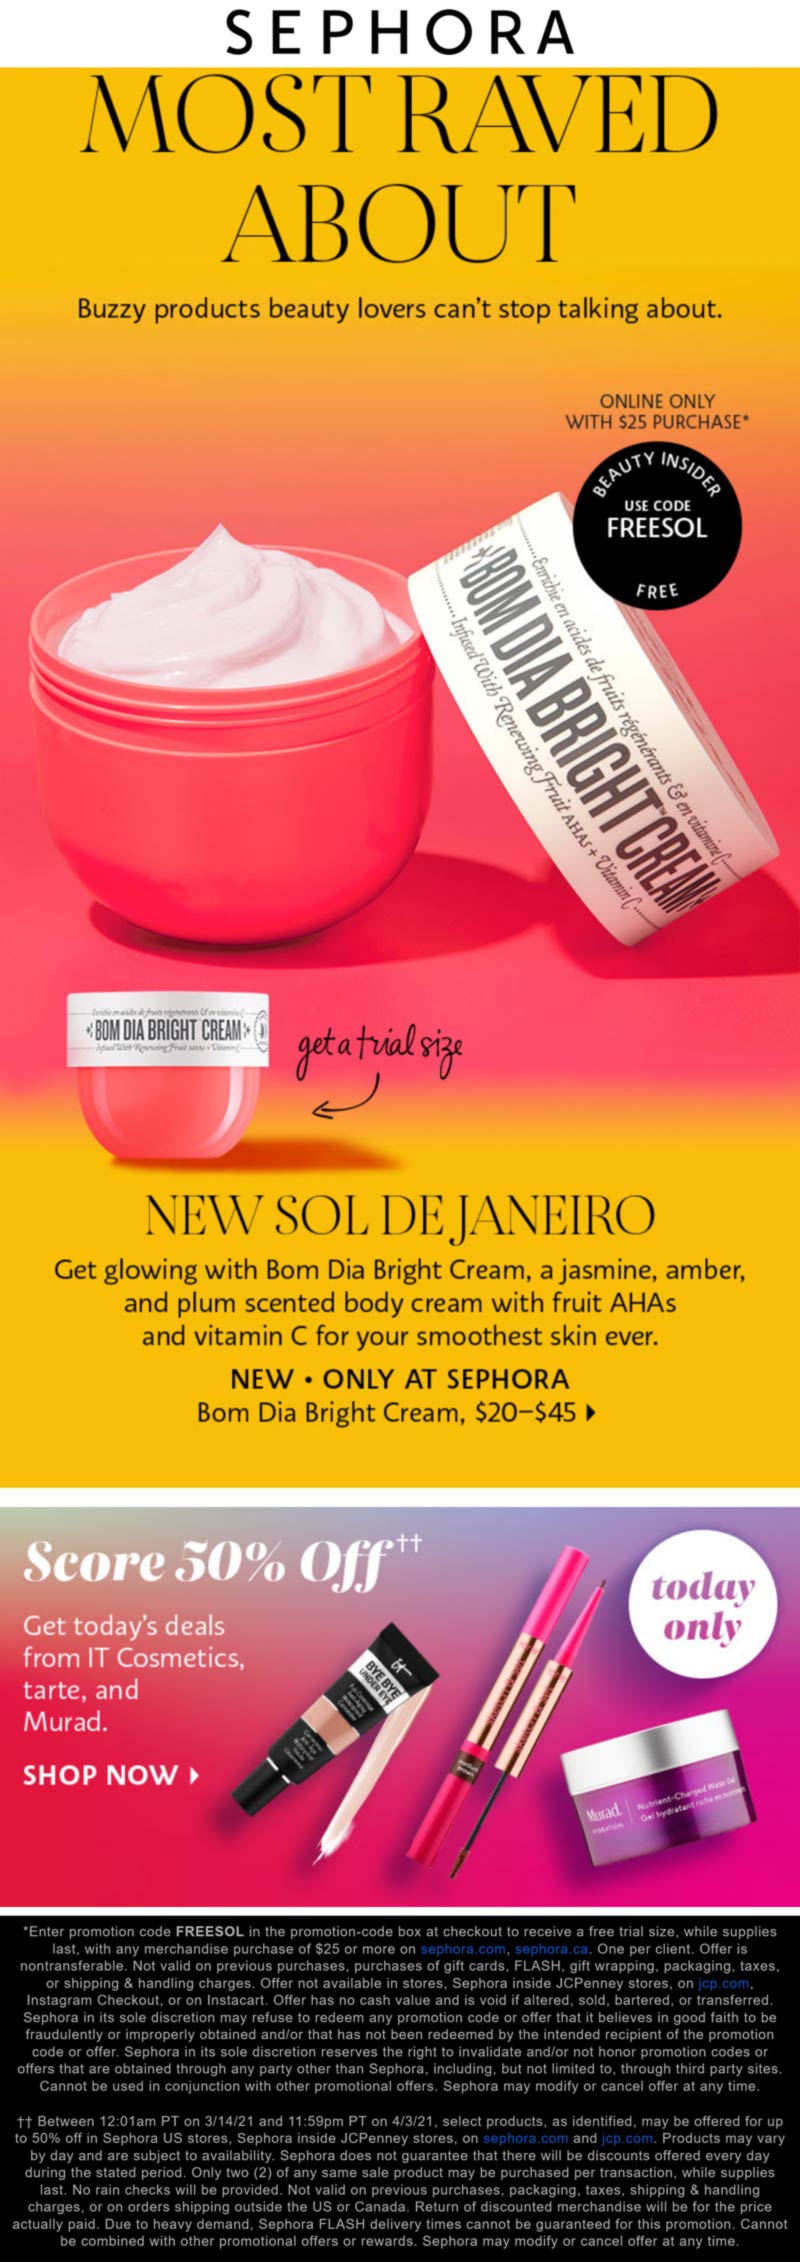 Sephora restaurants Coupon  50% off various + free bright cream today at Sephora beauty via promo code FREESOL #sephora 